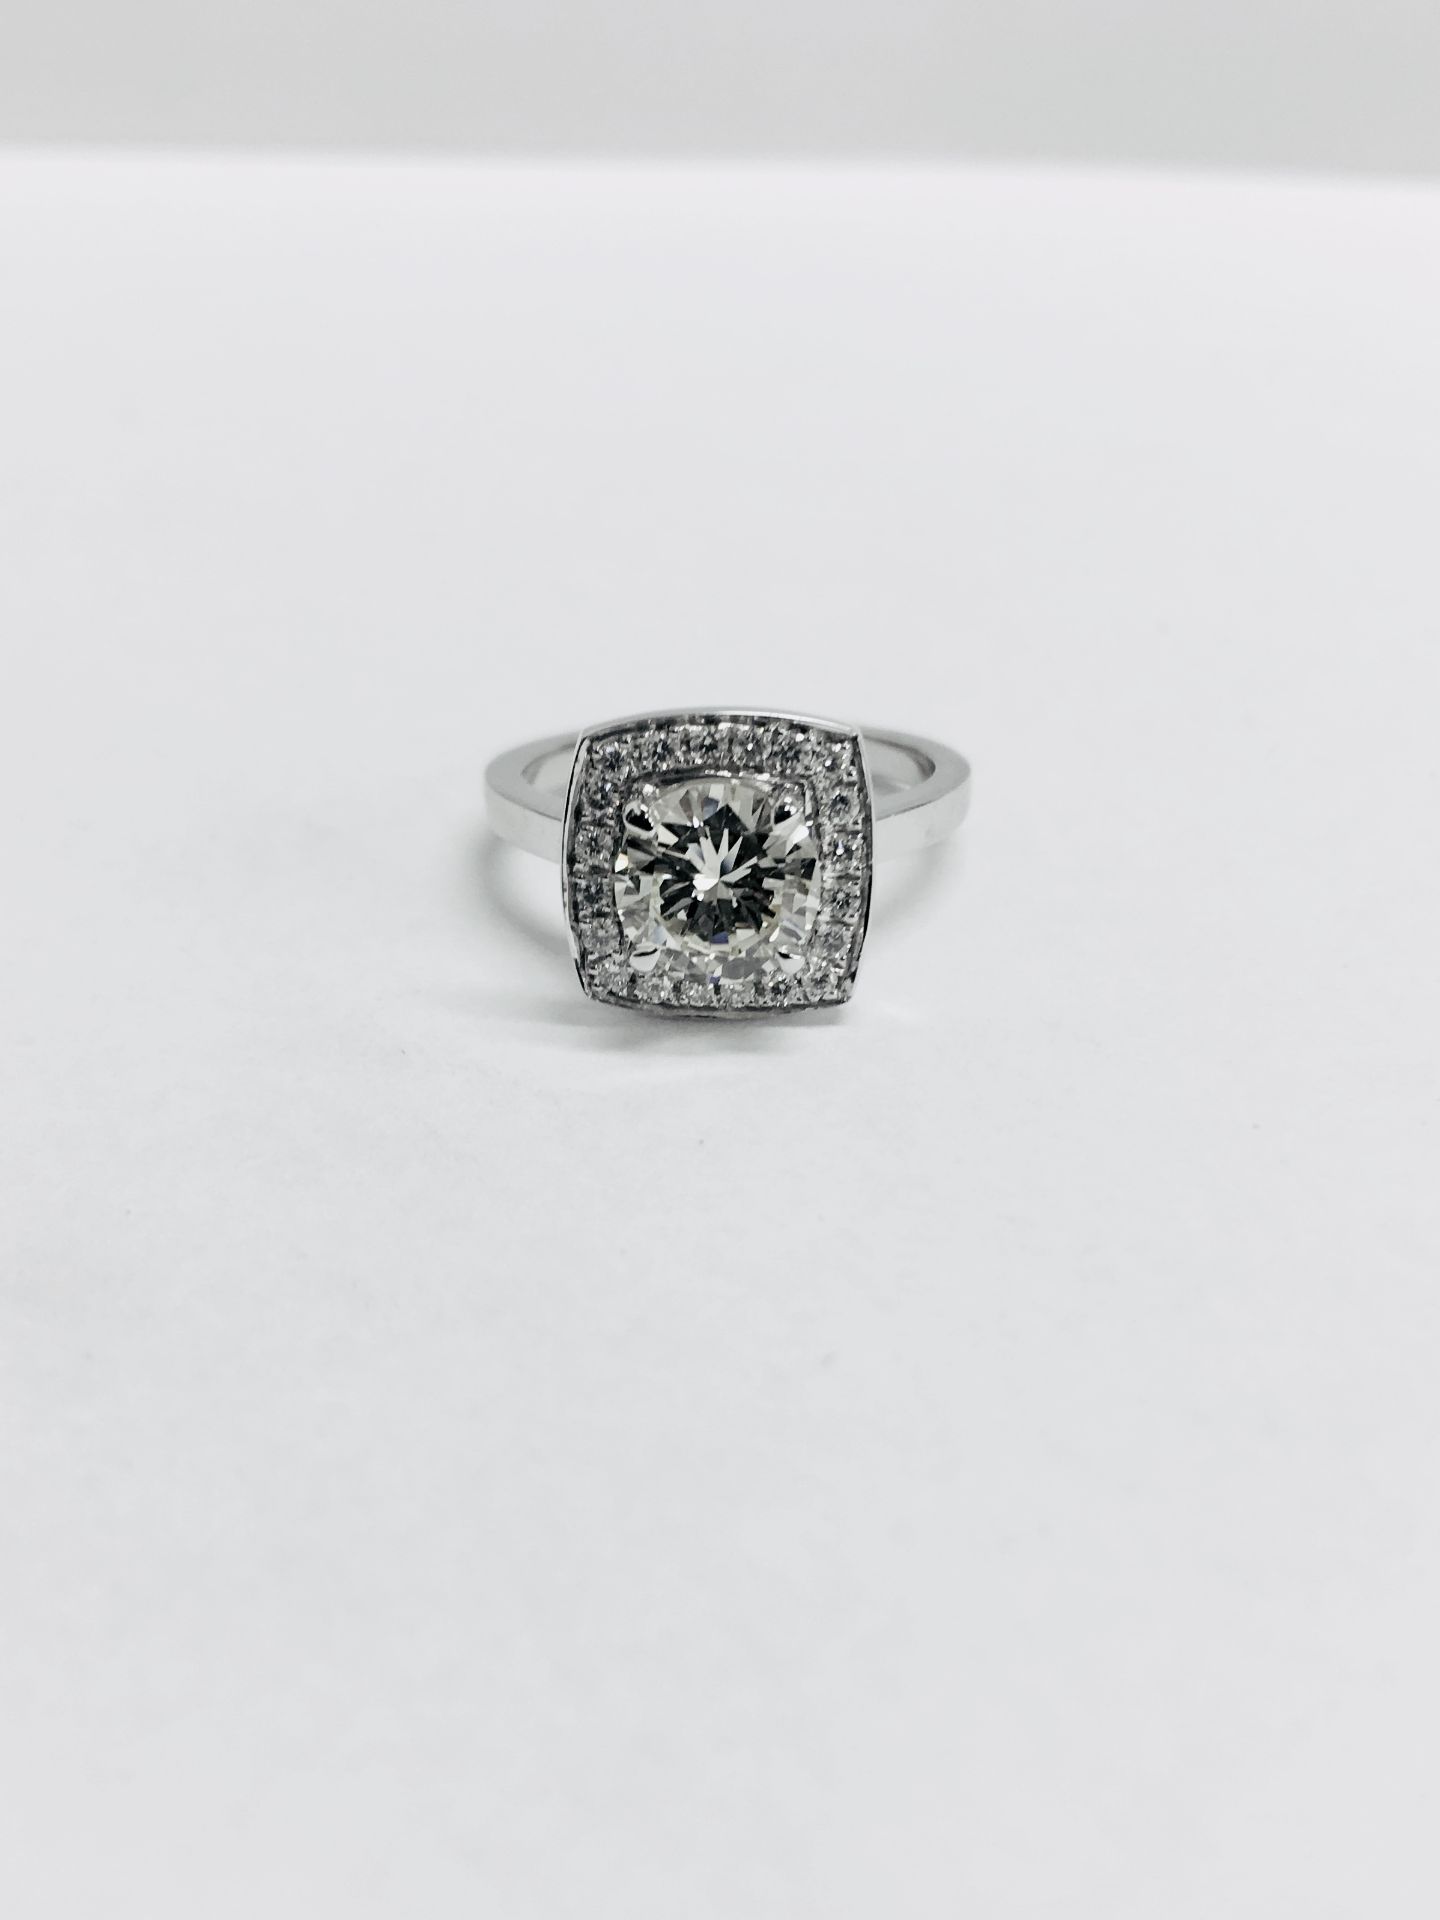 18ct white gold Handmade Halo style ring,0.50ct vvs1 grade g colour diamond,18ct white gold settig